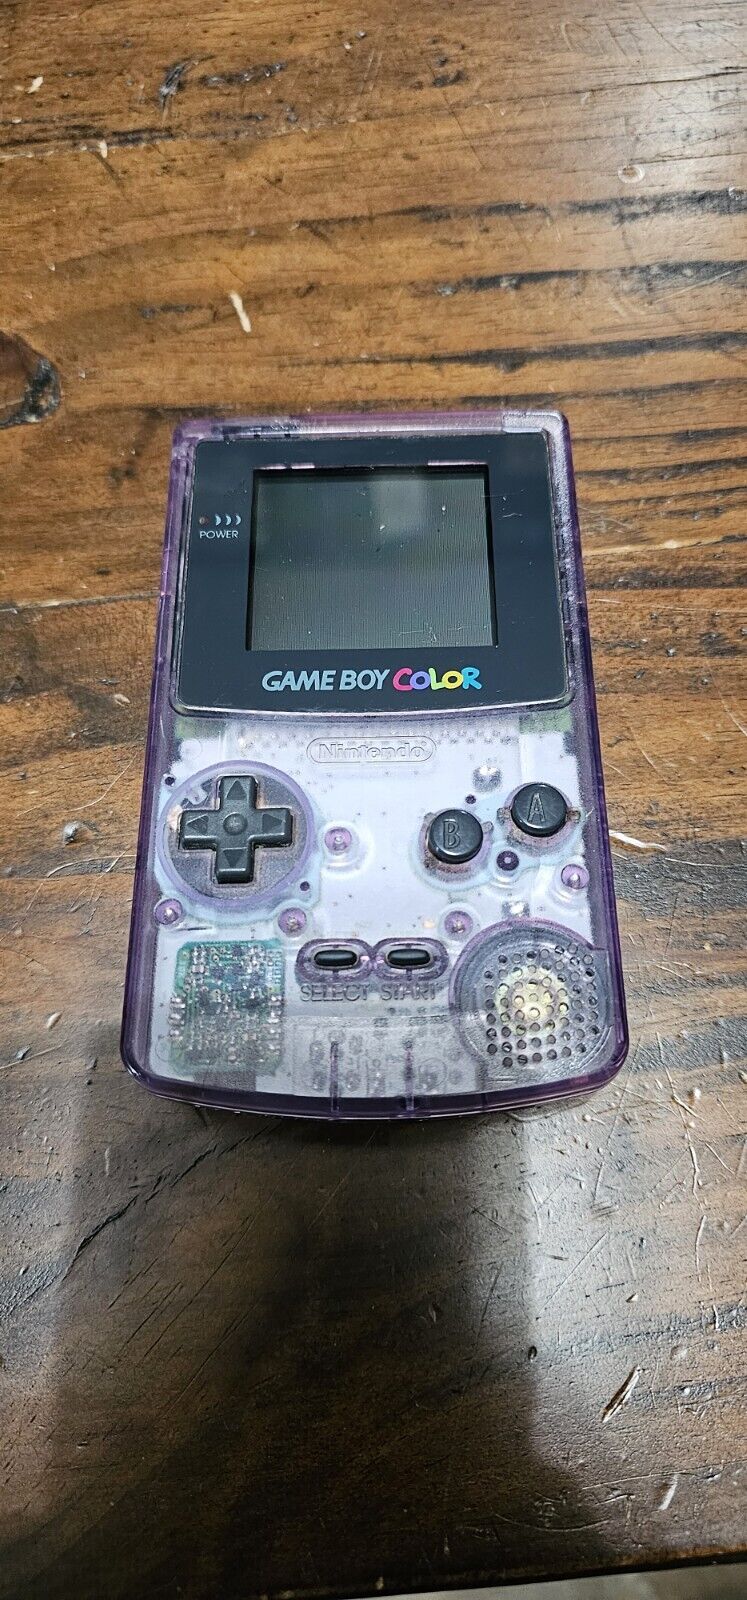 Nintendo Game Boy Color Handheld System - Atomic Purple Pretty Clean